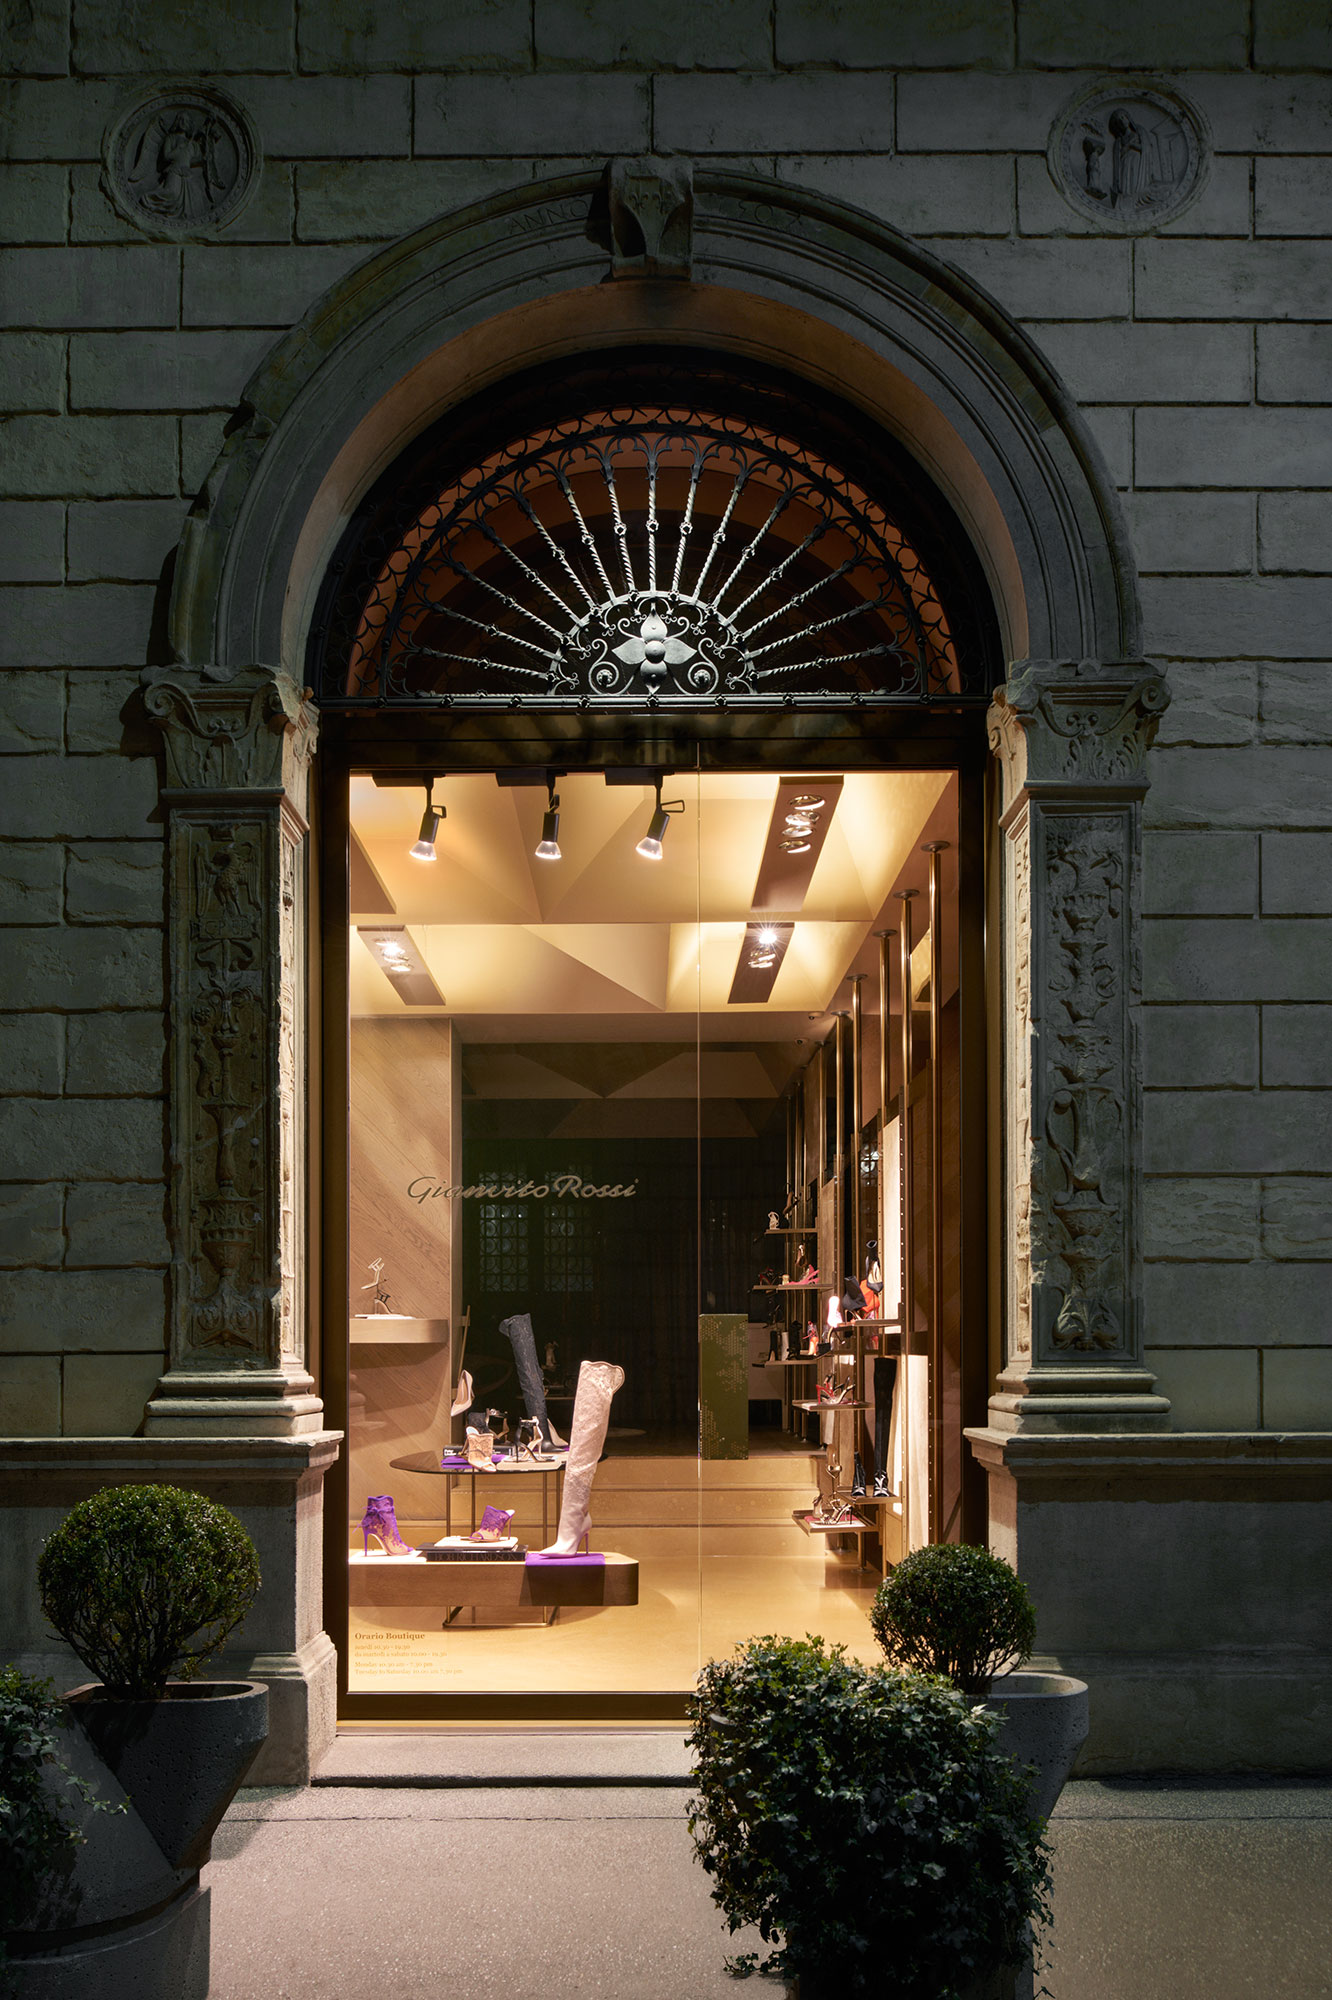 Gianvito Rossi boutique in Milan 2018 | Paola Pansini | gianvito rossi | Numerique Retouch Photo Retouching Studio